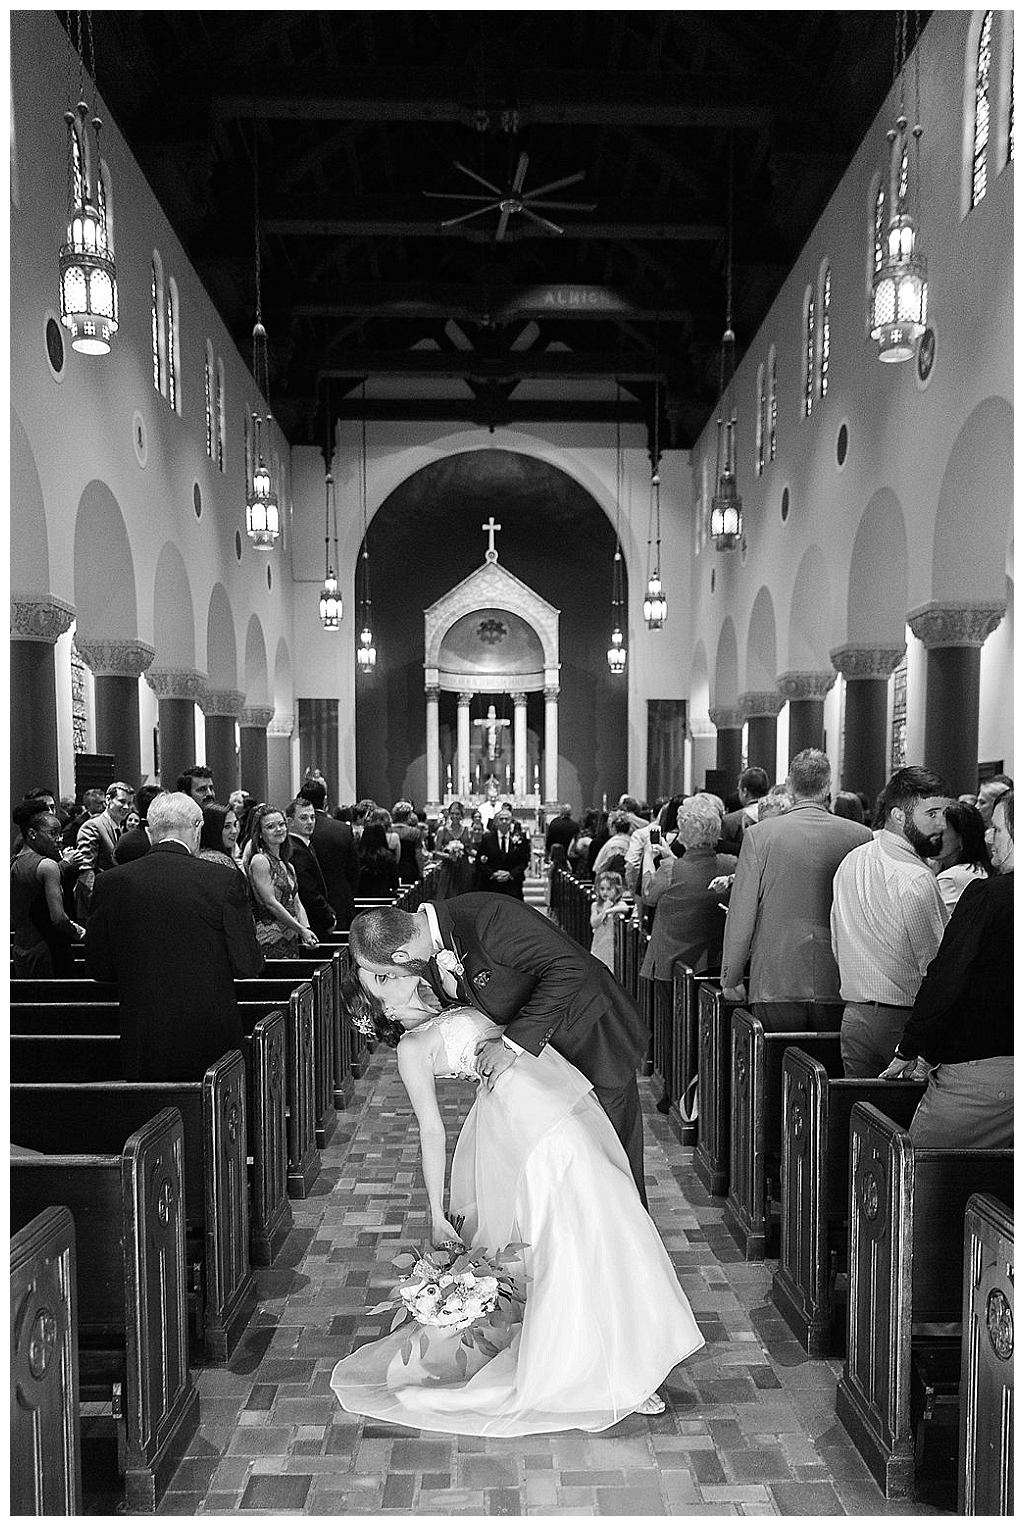 Lexington Wedding Photographer, Love The Renauds Wedding Photography, Lauren & Tim's Wedding